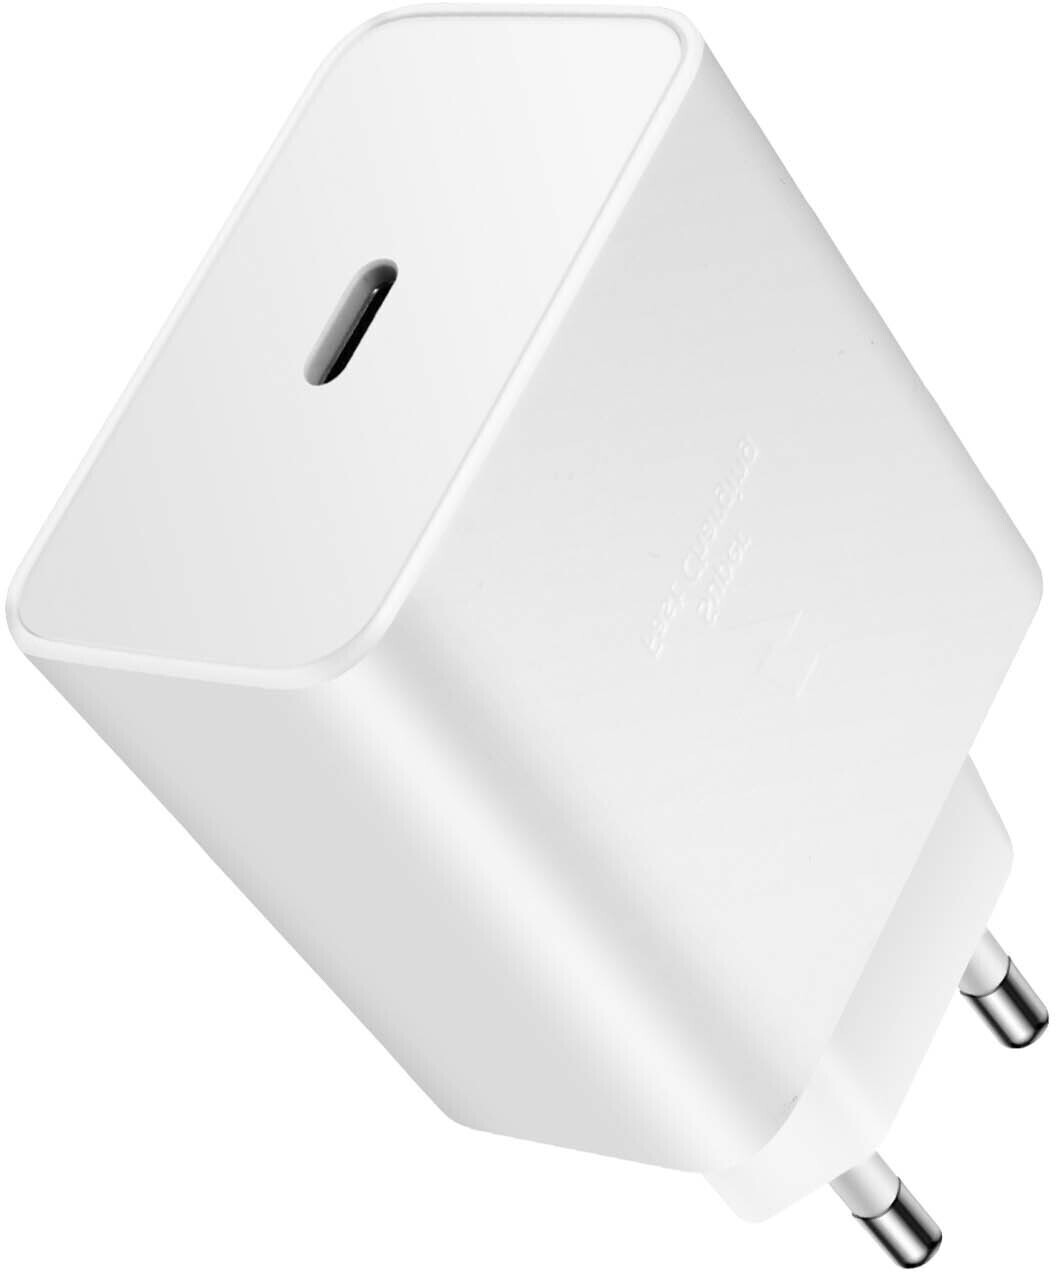 Samsung EP-TA865 Cargador Ultra Rápido USB-C 65W Blanco (White